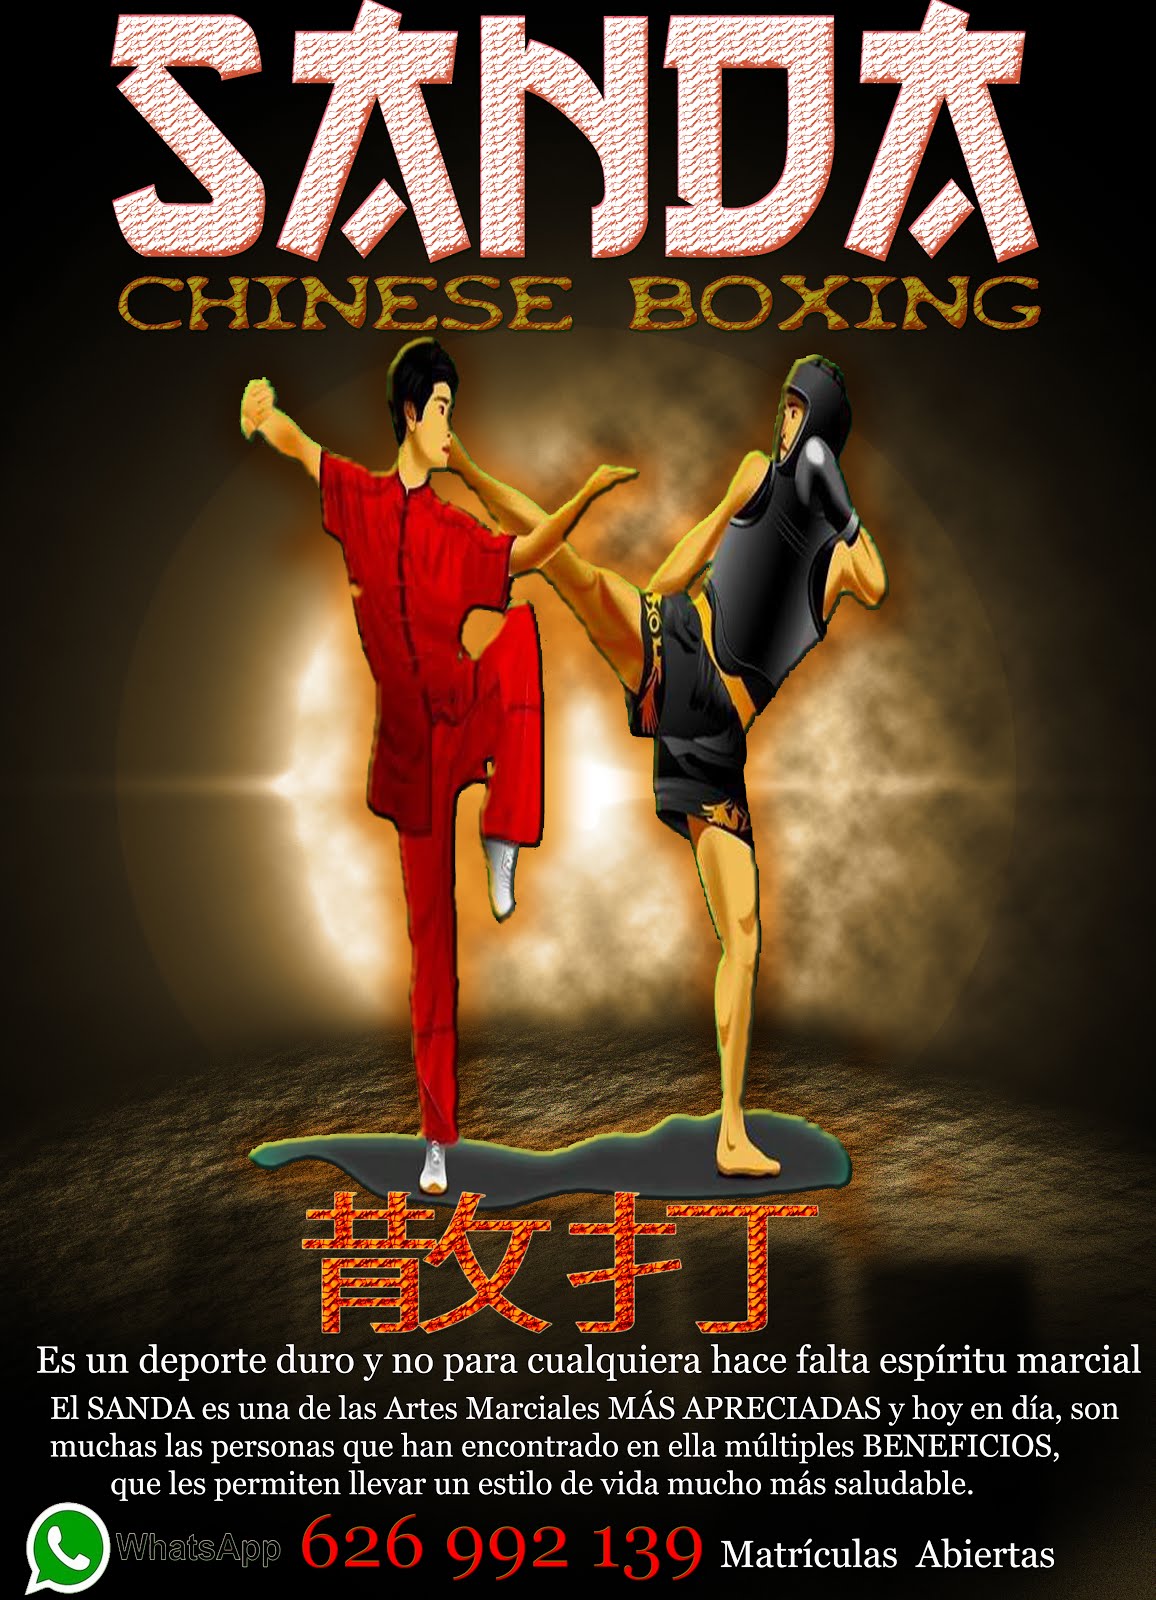 Sanda (散打)  San shou (散手) Boxe Chines - Boxeo Chino. GrandMaster Senna.